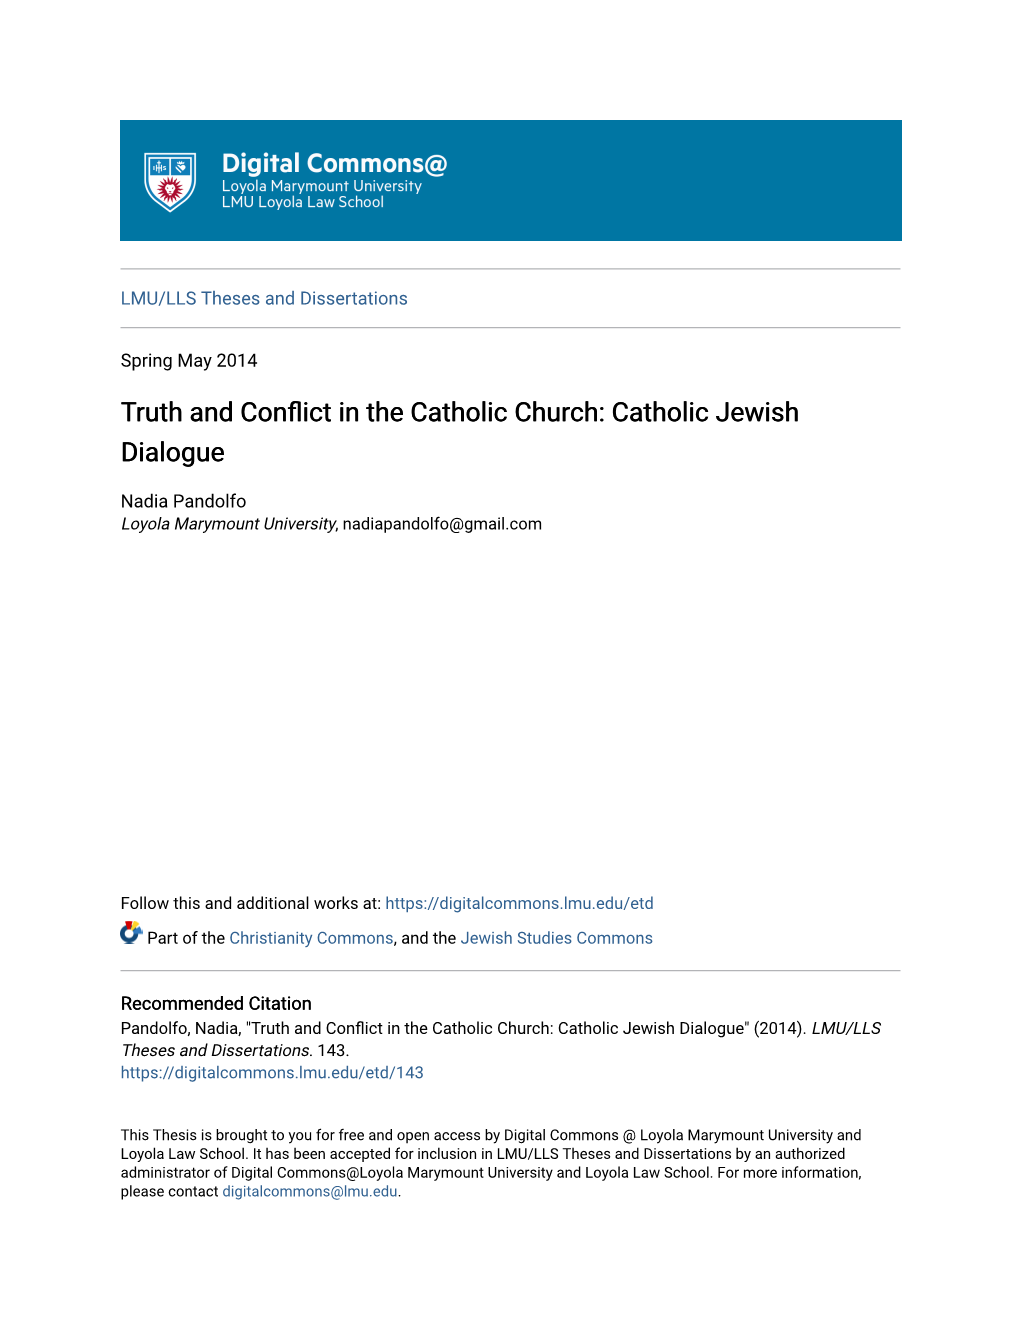 Catholic Jewish Dialogue